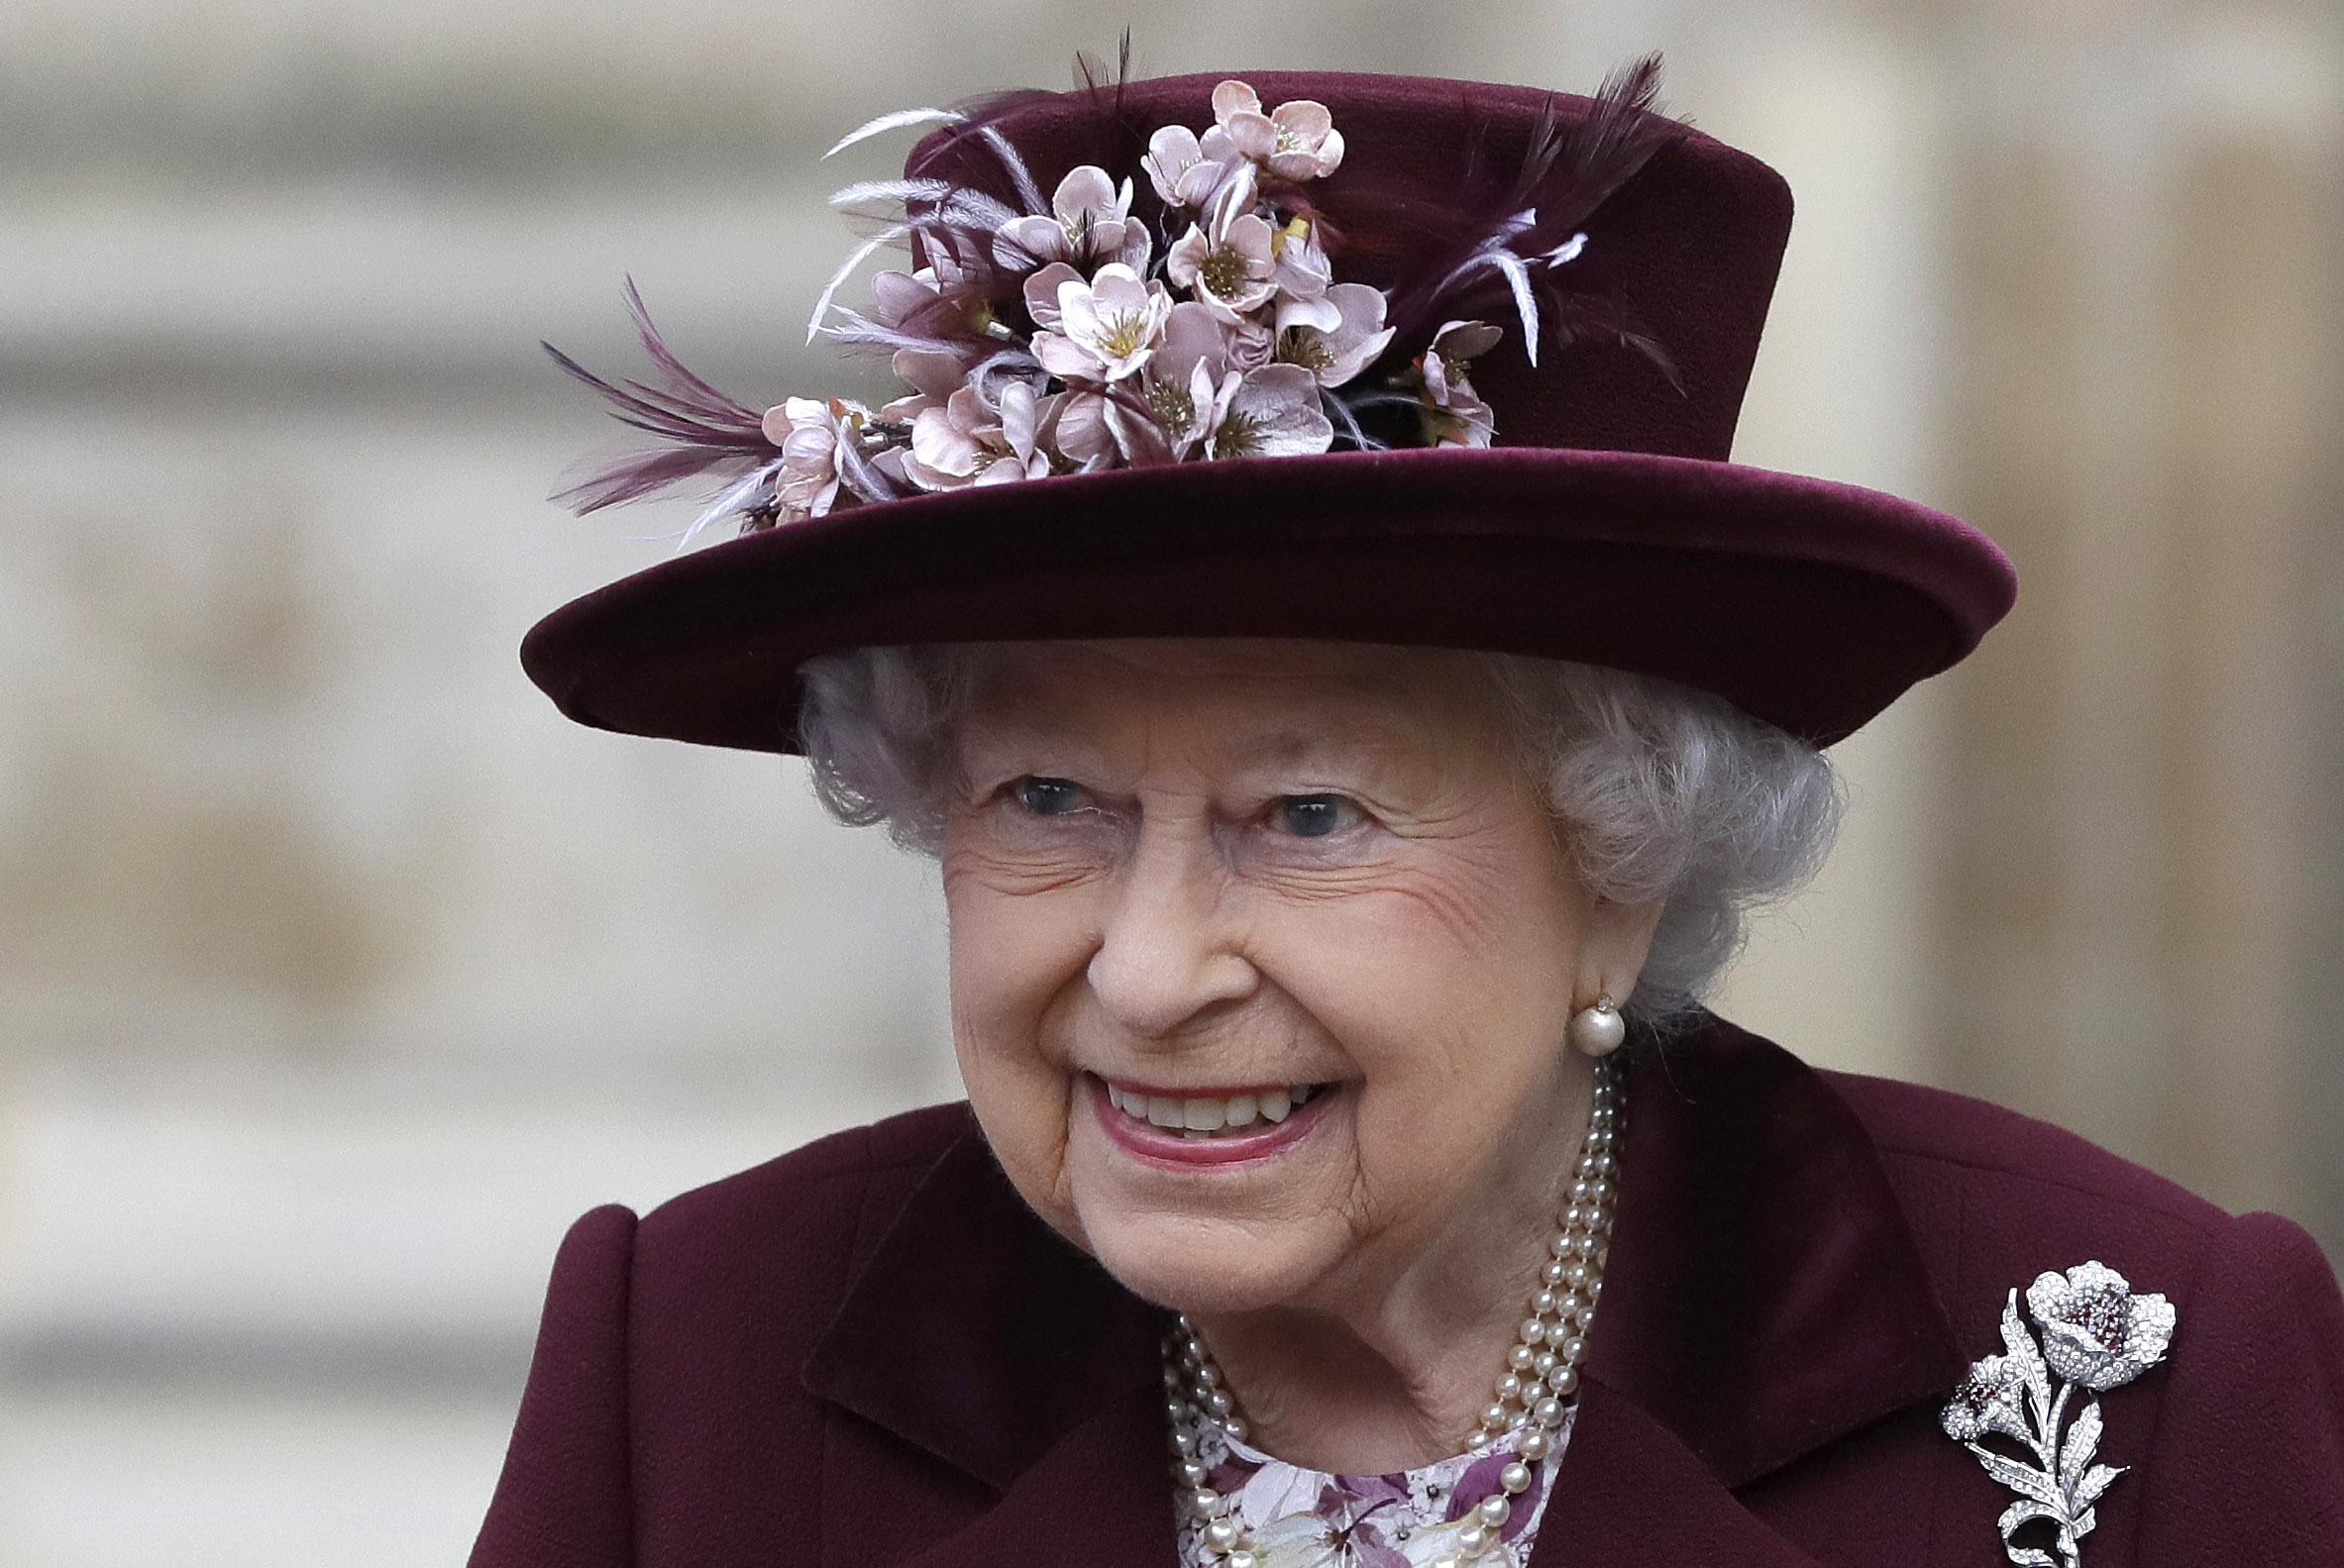 Regina Elisabeta a Marii Britanii imbracata elegant, in costum negru si cu palarie neagra